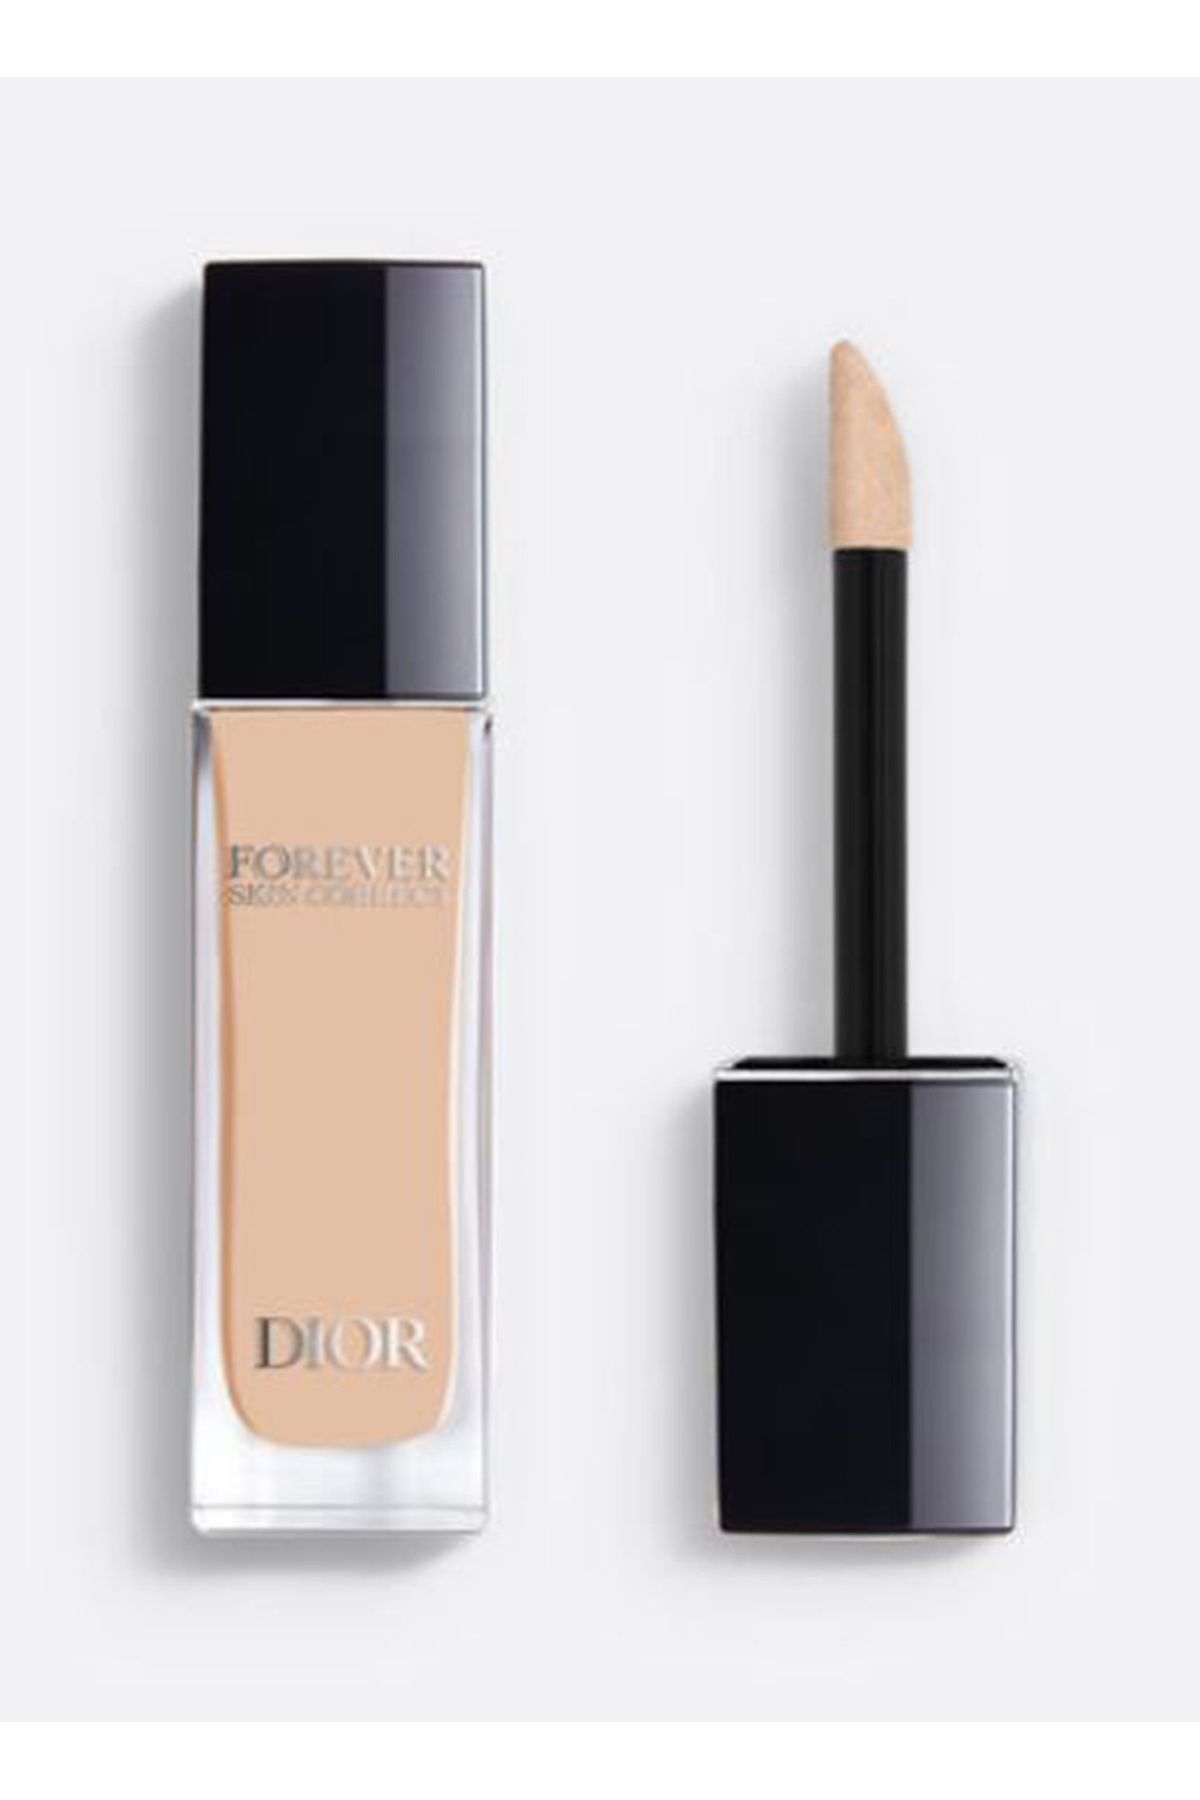 Dior Kapatıcı 2CR - Forever Skin Correct 11ml